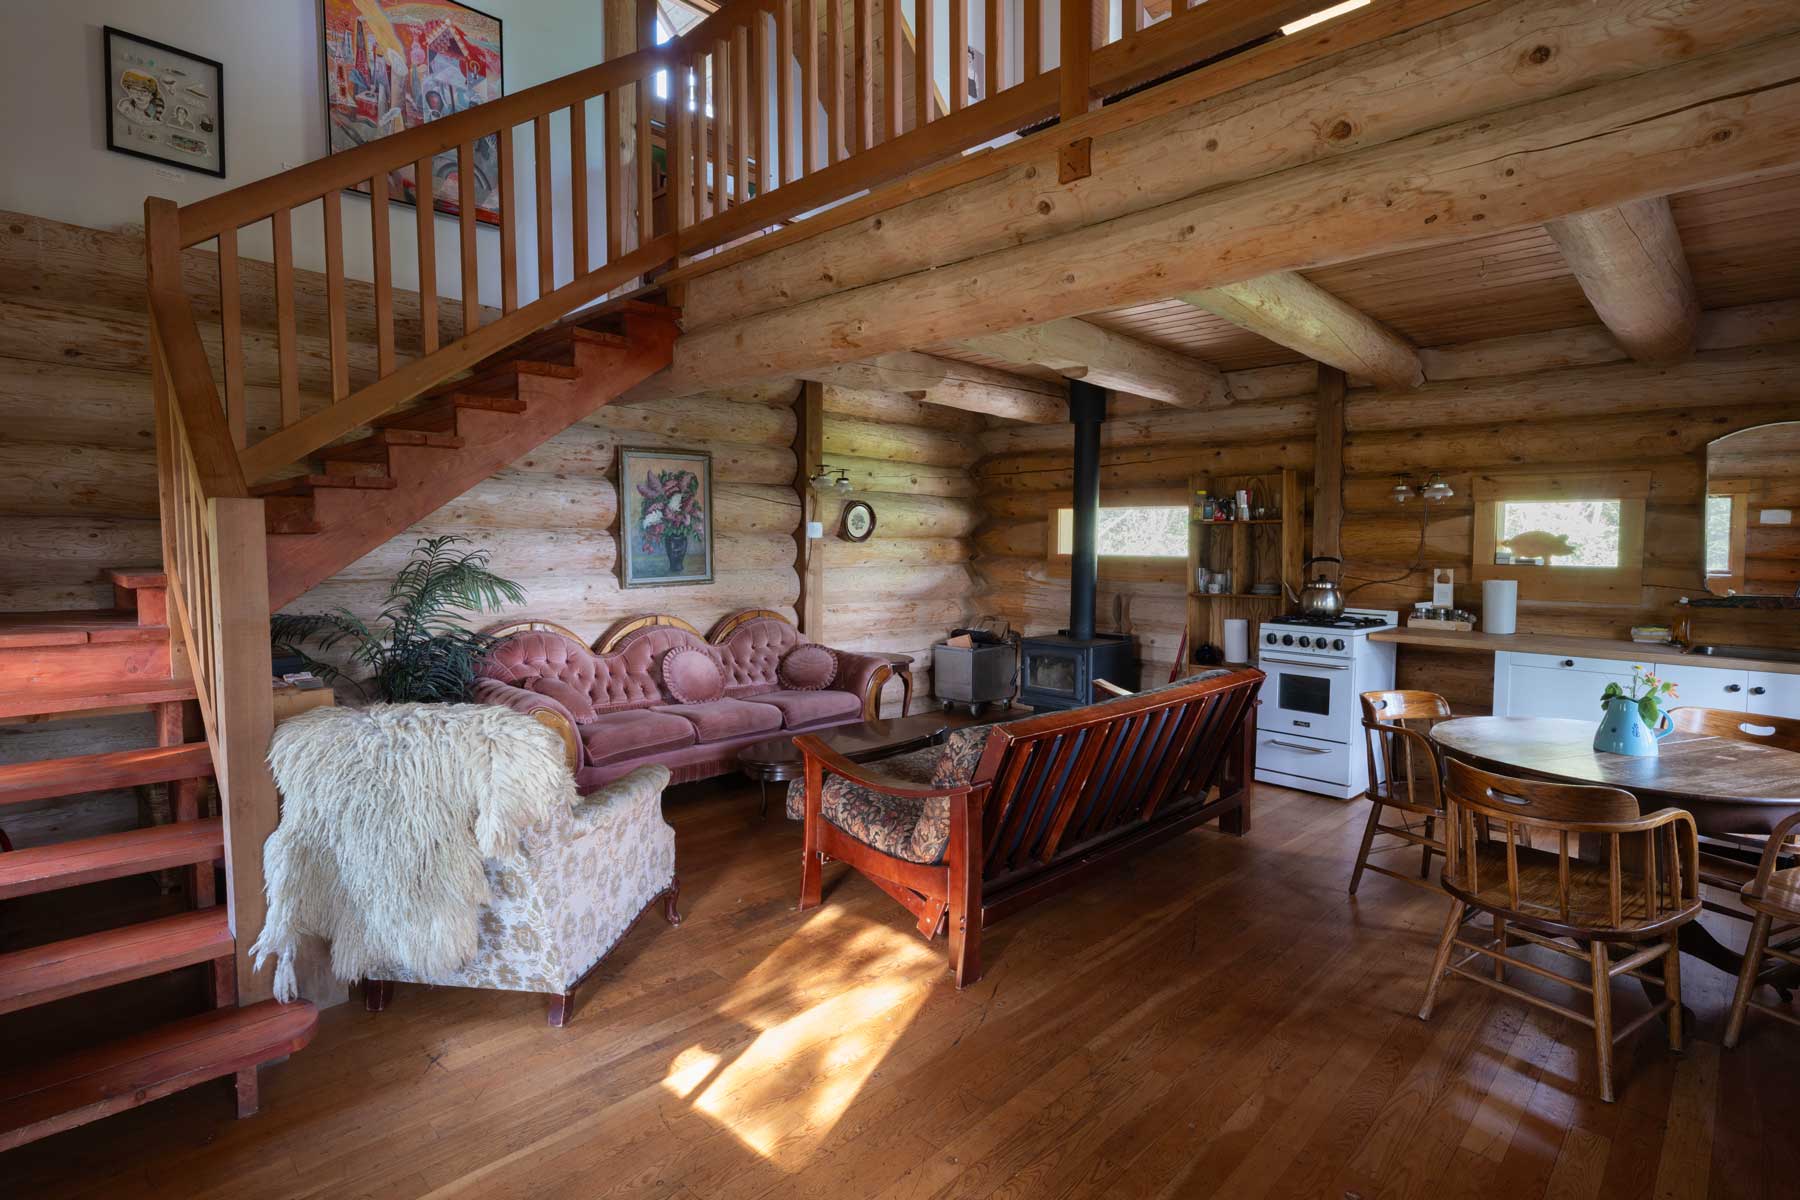 The Wild Rose cabin interior.